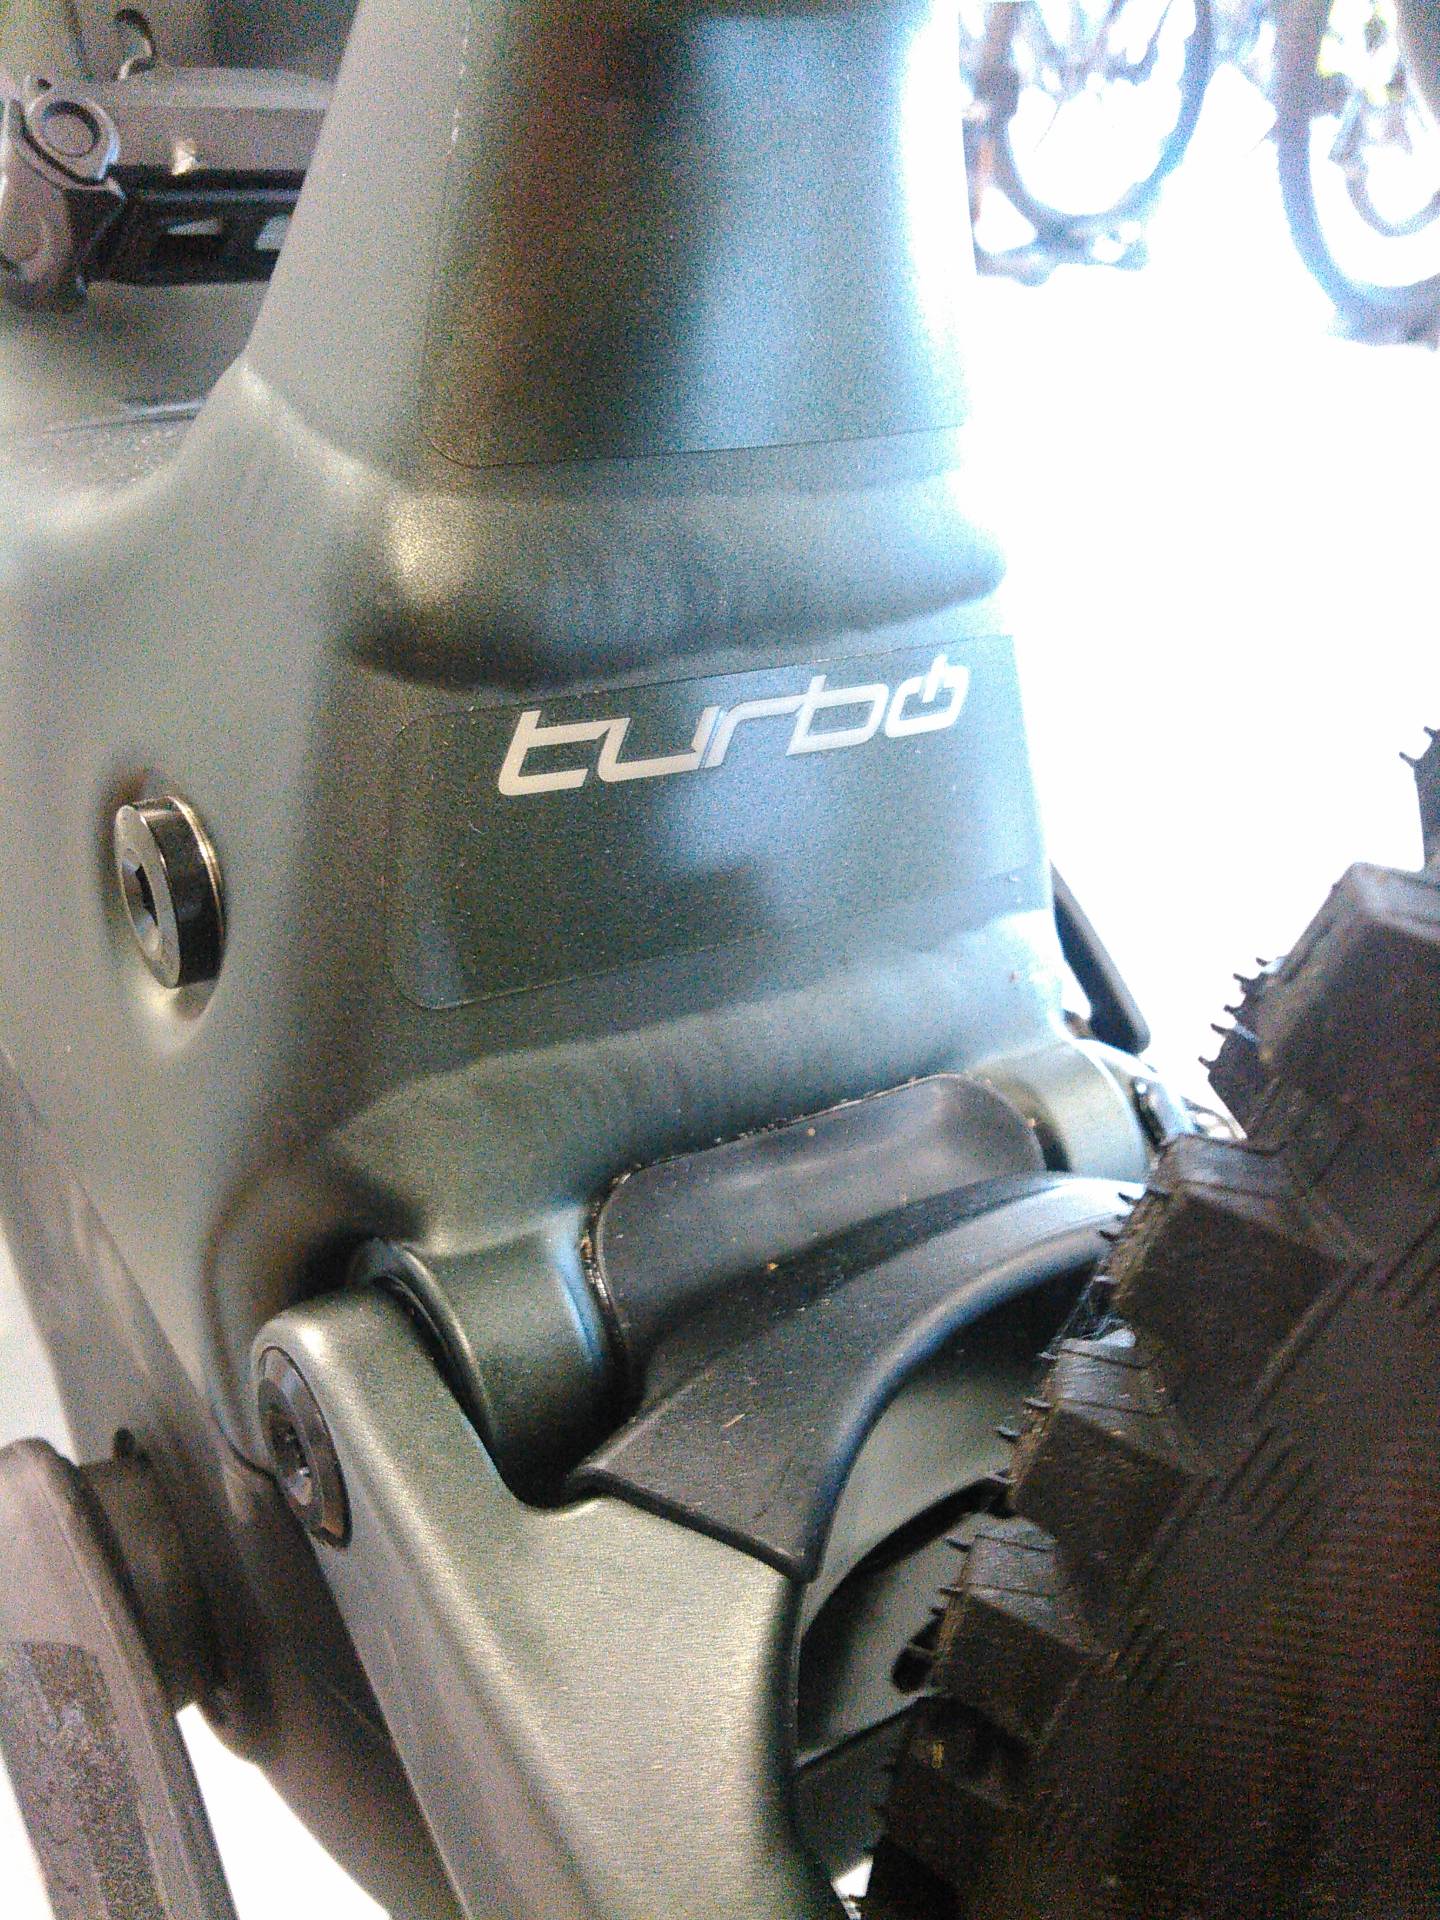 2021 turbo levo comp